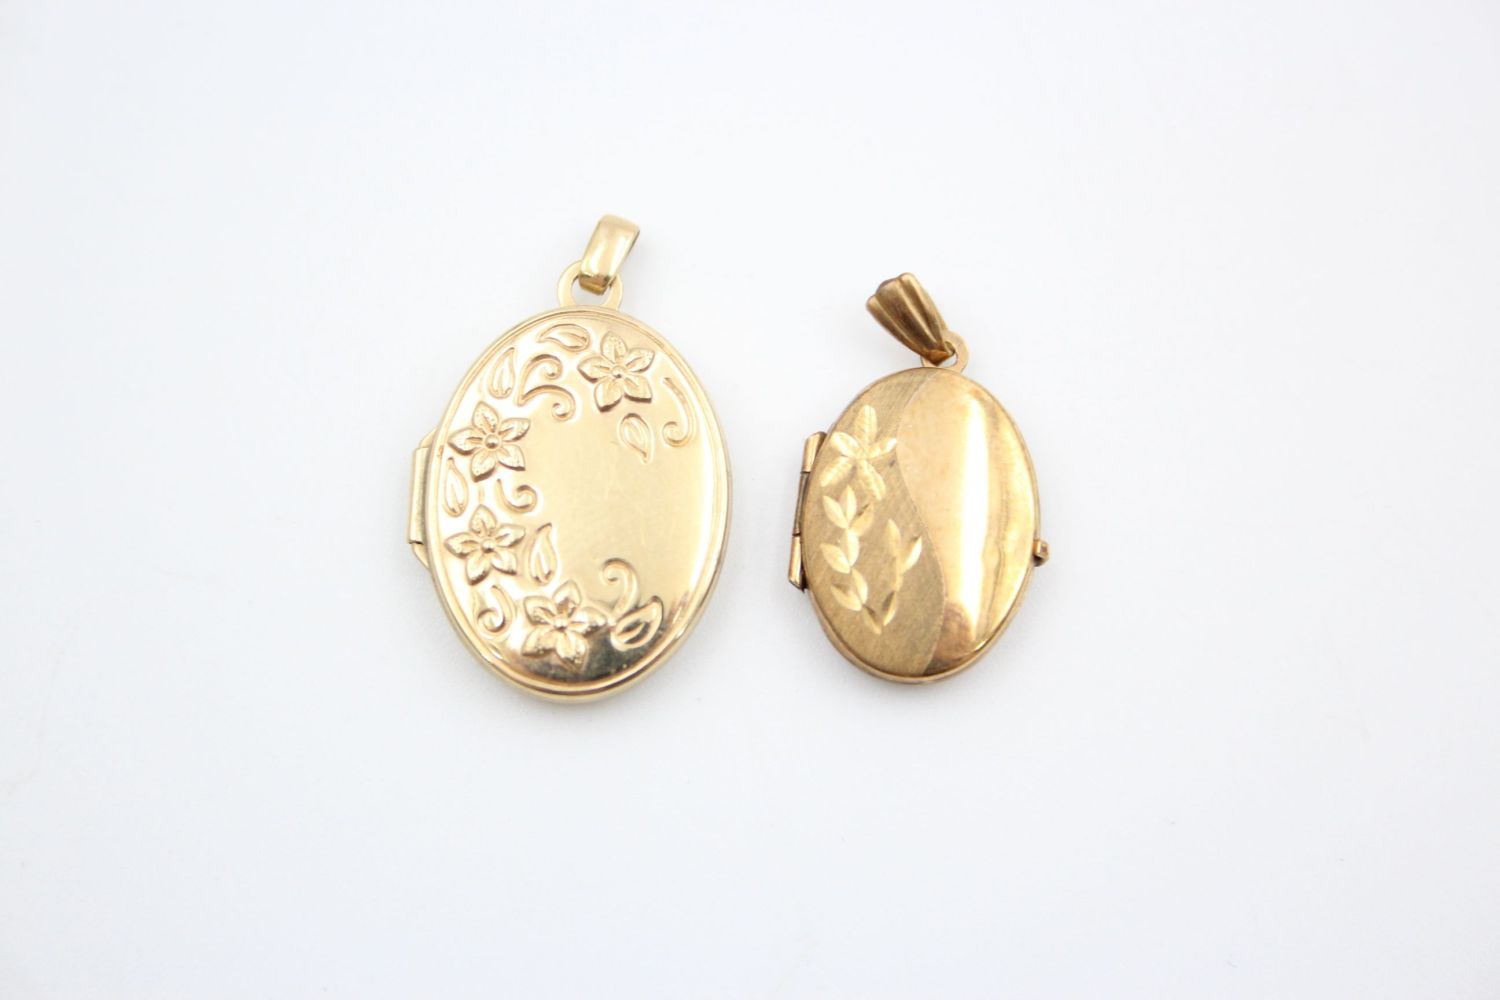 2 x 9ct gold patterned locket pendants 3 grams gross